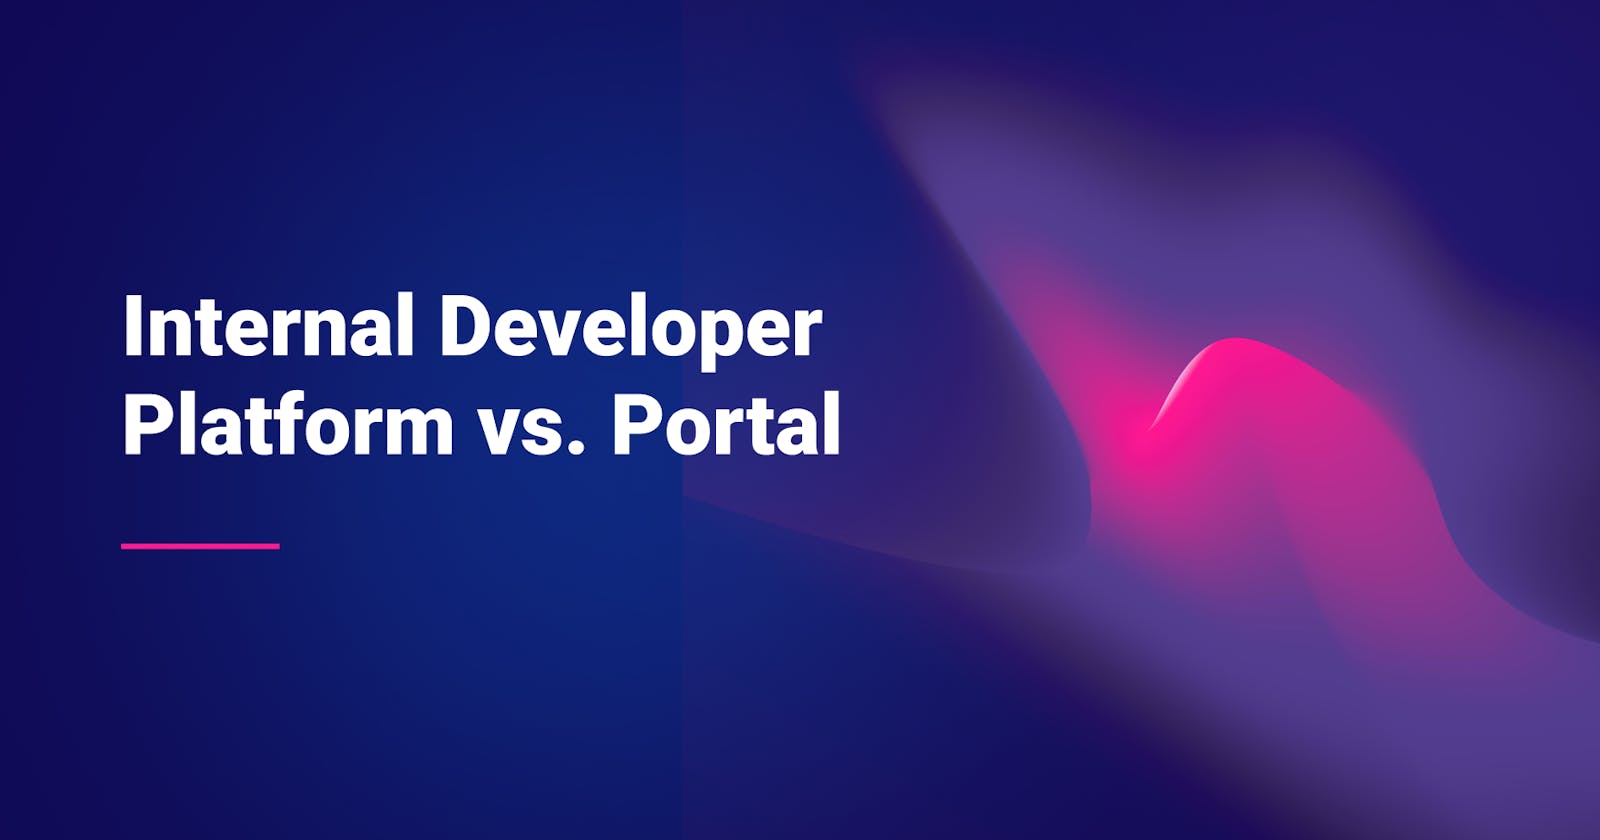 Internal Developer Platform vs Internal Developer Portal: What's The Difference?